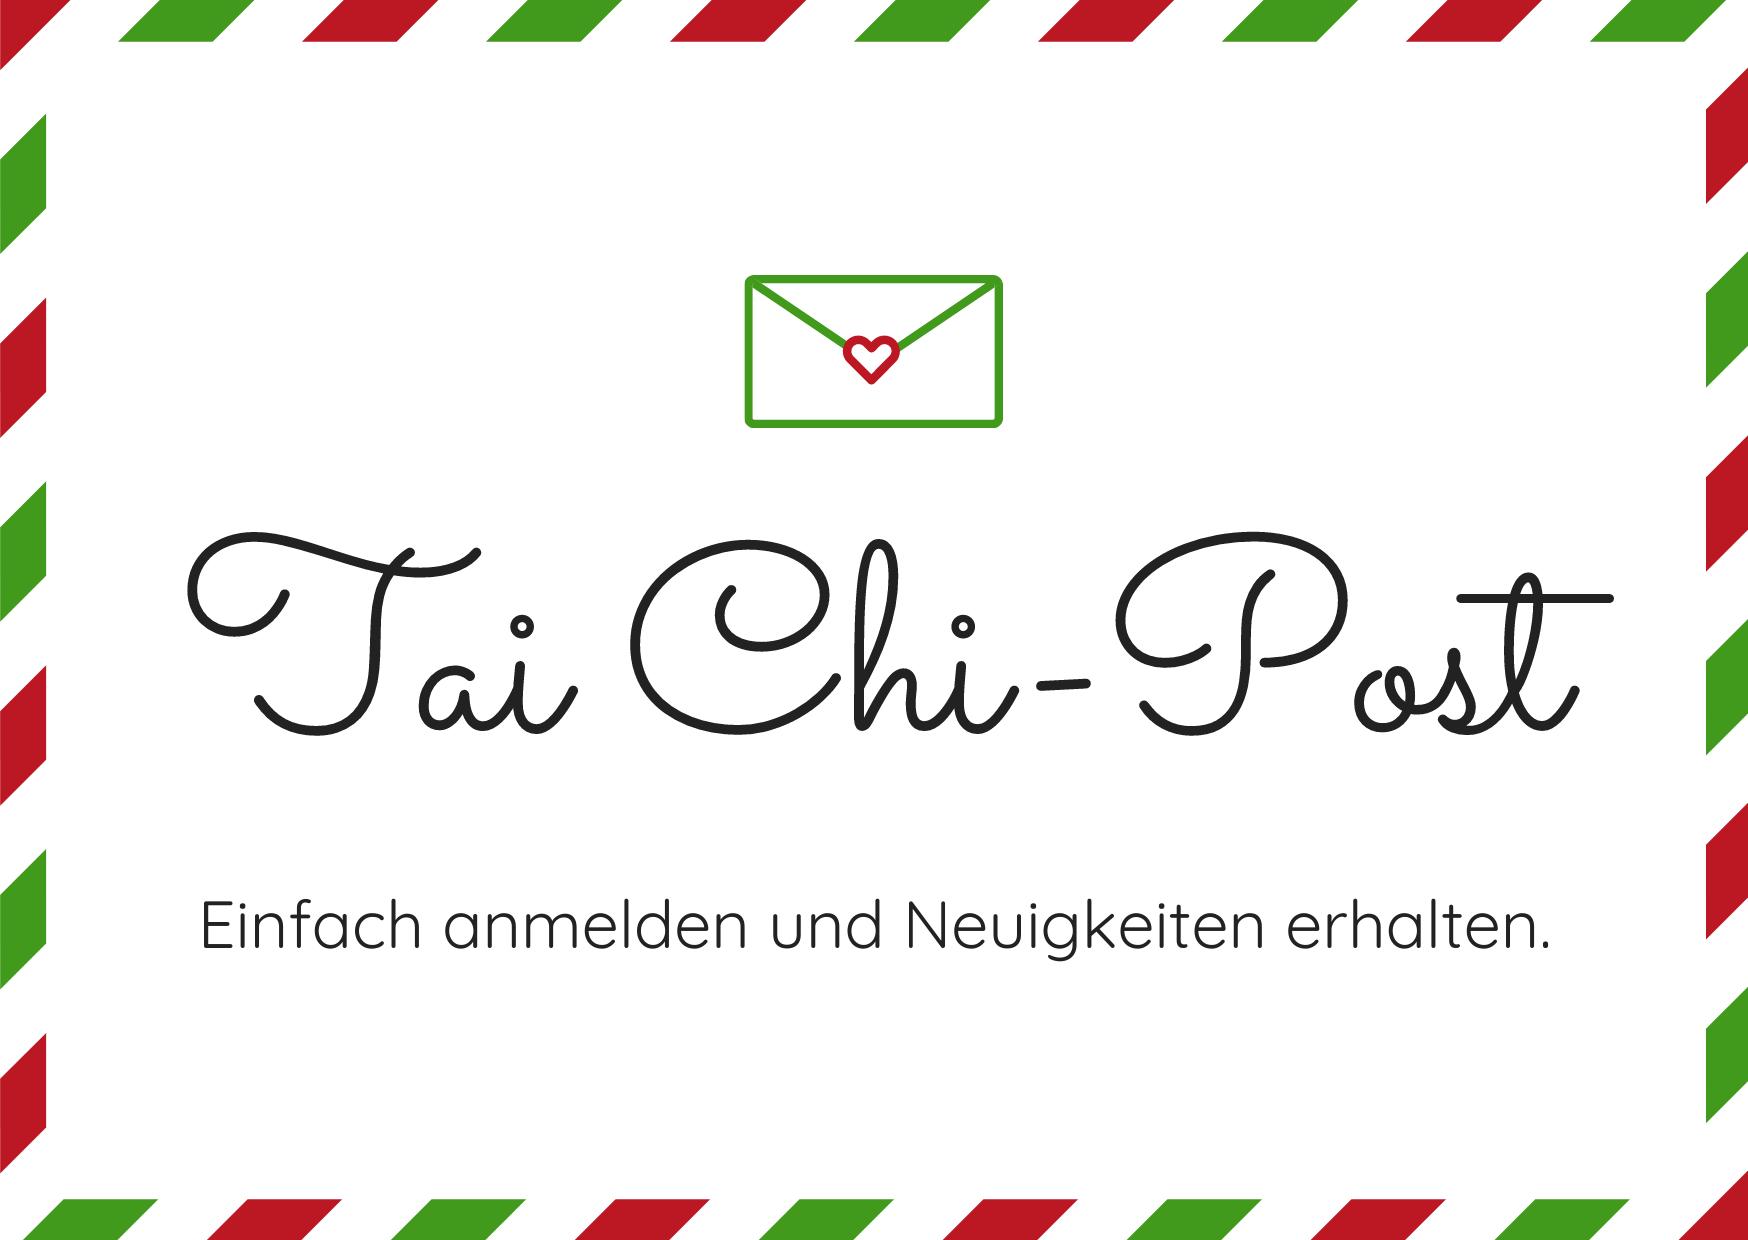 Newsletter: Tai Chi-Post